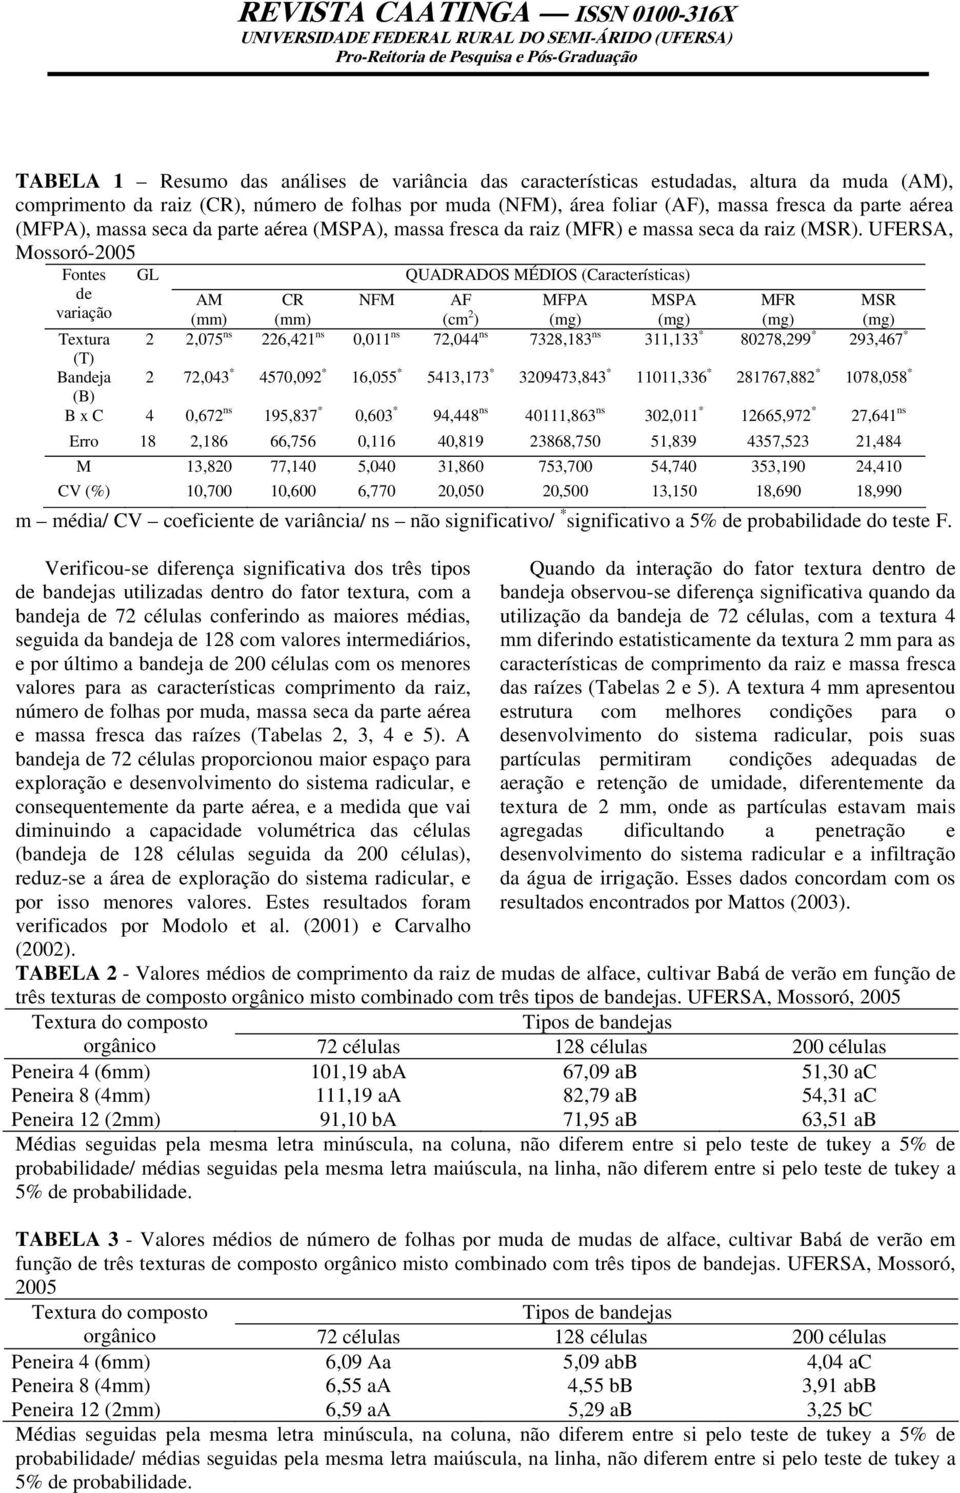 UFERSA, Mossoró-2005 Fontes GL QUADRADOS MÉDIOS (Características) de AM CR NFM AF MFPA MSPA MFR MSR variação (mm) (mm) (cm 2 ) (mg) (mg) (mg) (mg) Textura 2 2,075 ns 226,421 ns 0,011 ns 72,044 ns